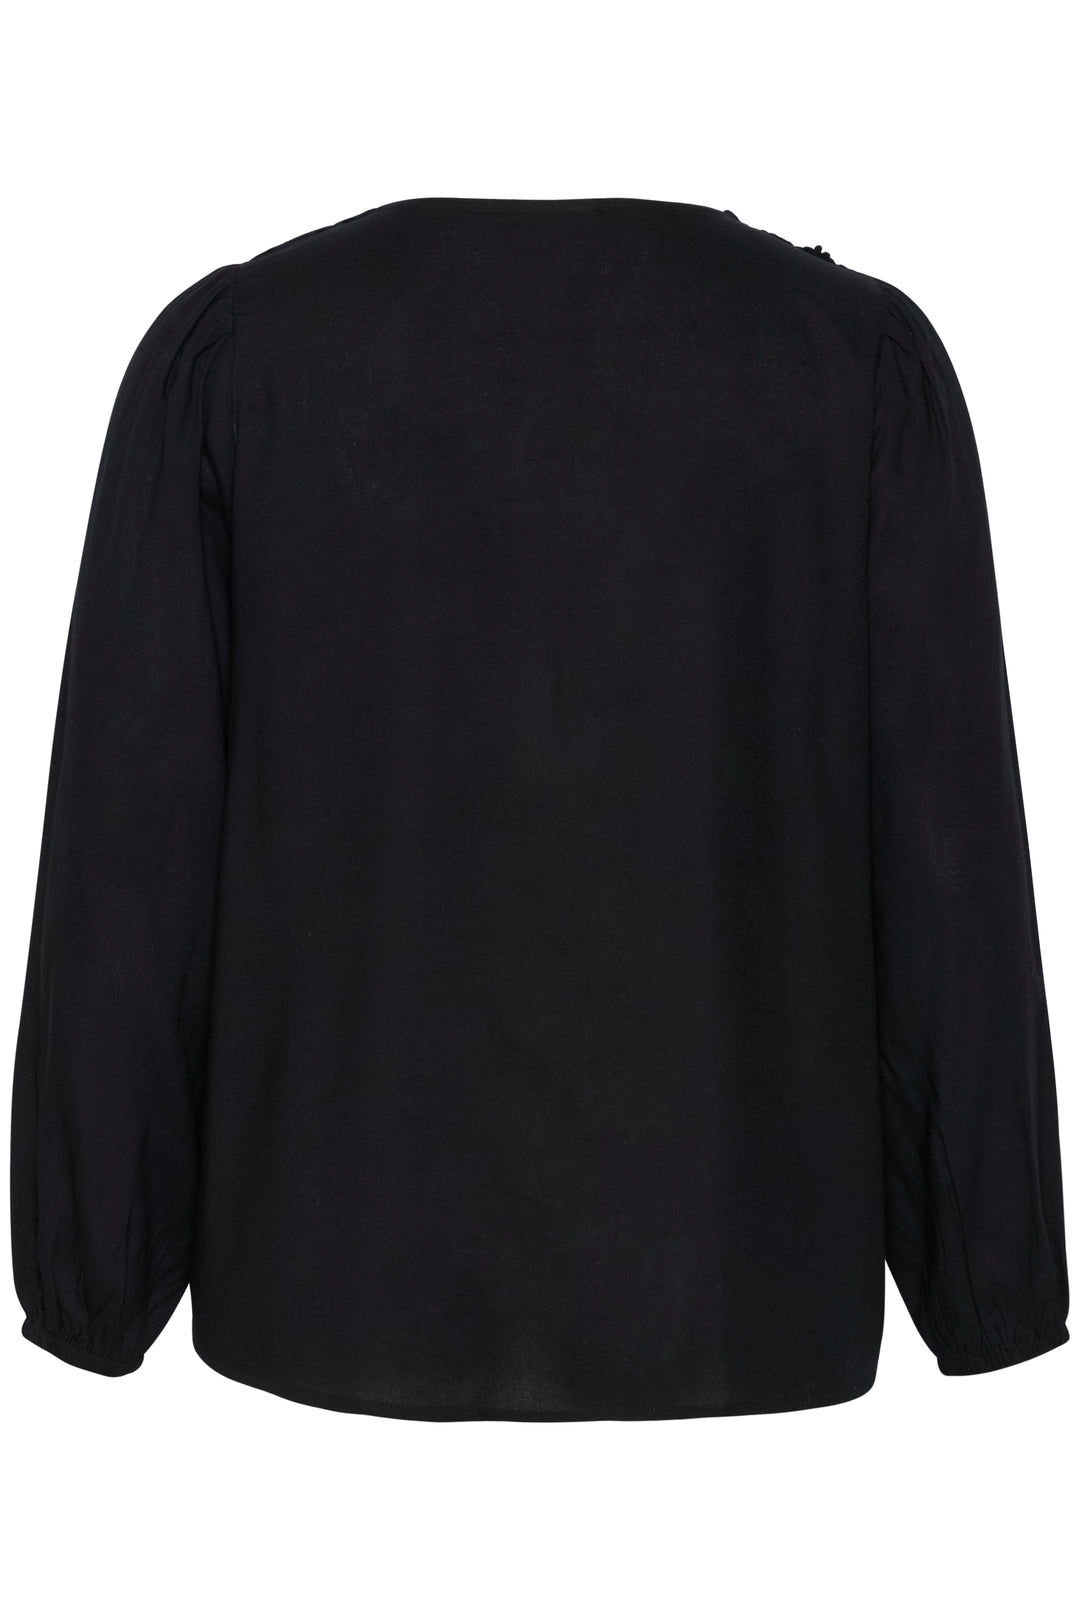 zwarte blouse met kant op schouders-kaffe curve-